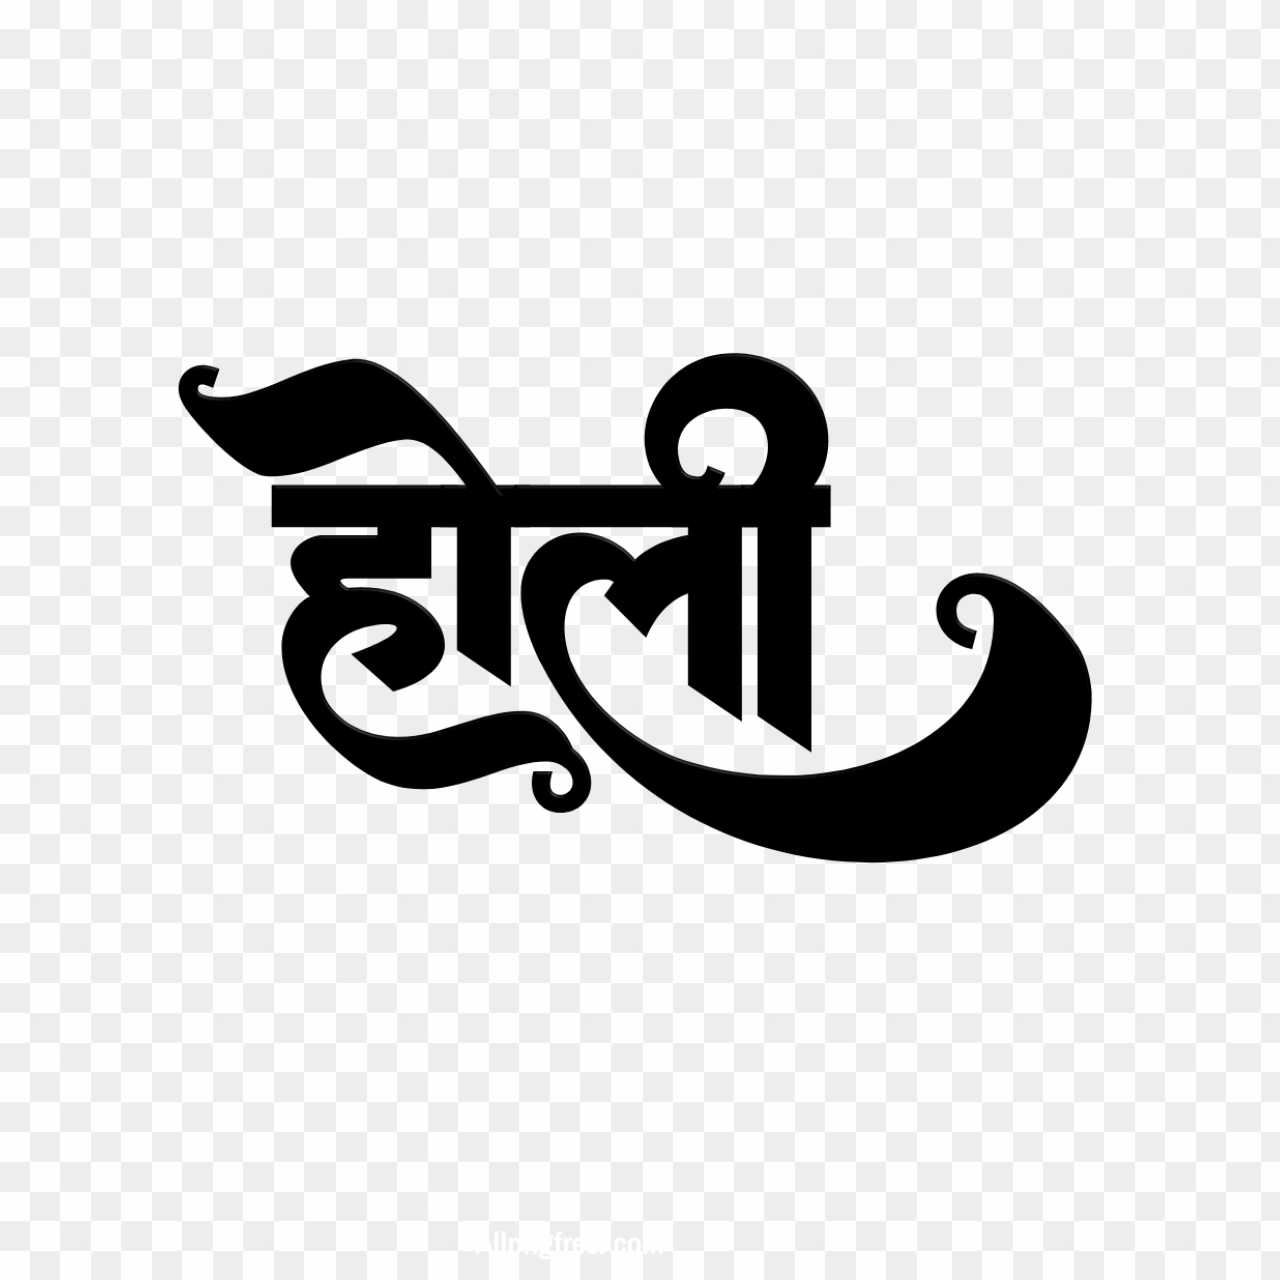 Stylist Hindi font Holi text PNG image download 